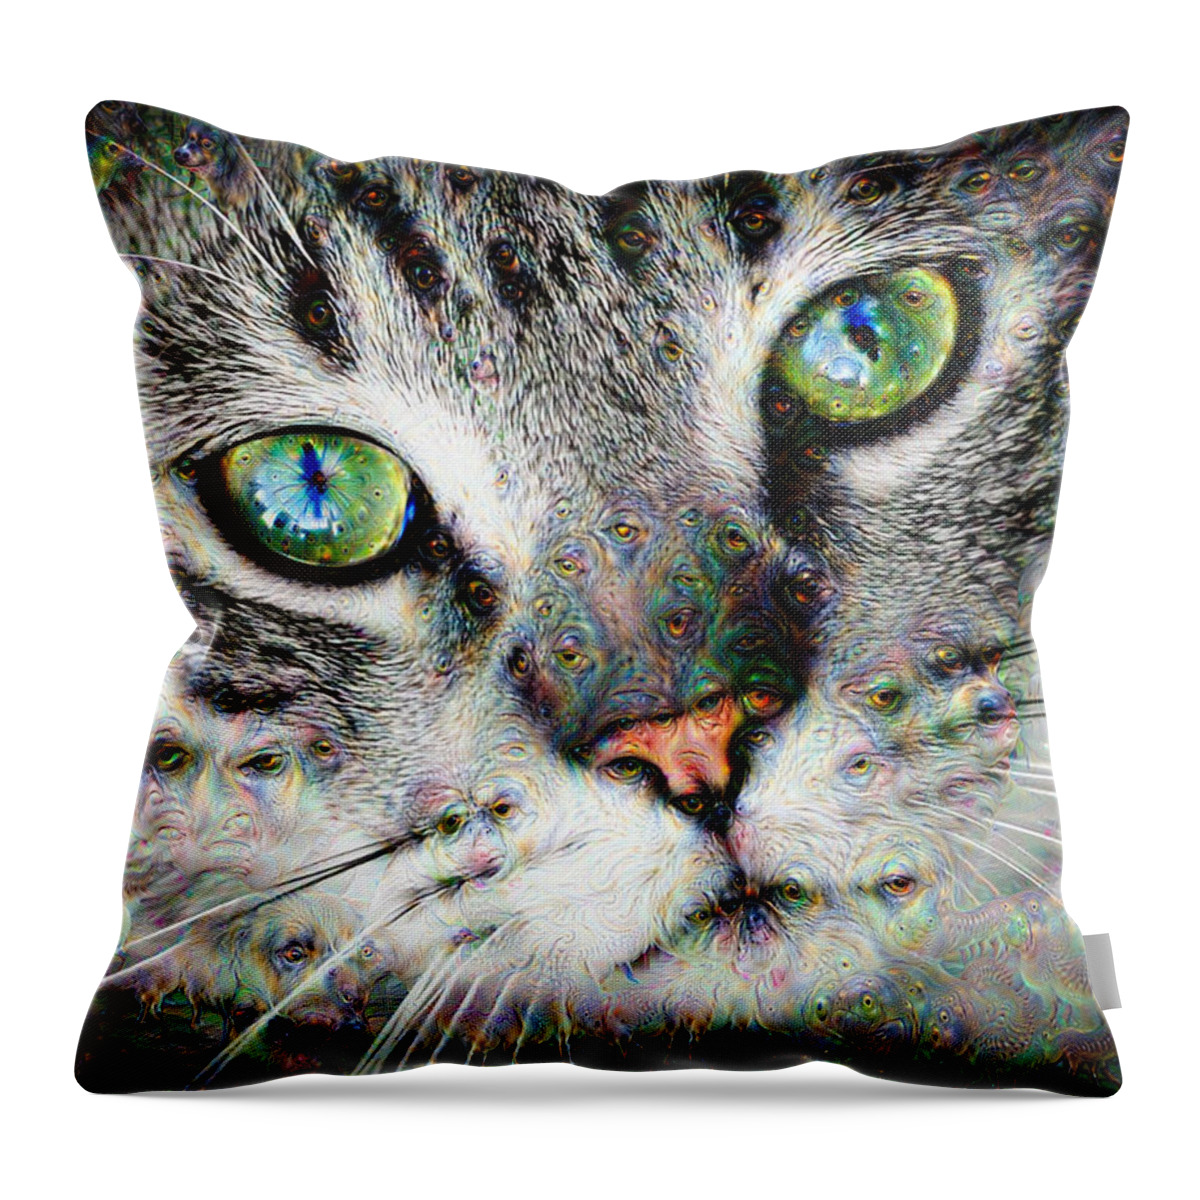 Cat Throw Pillow featuring the digital art Trippy deep dream cat portrait by Matthias Hauser